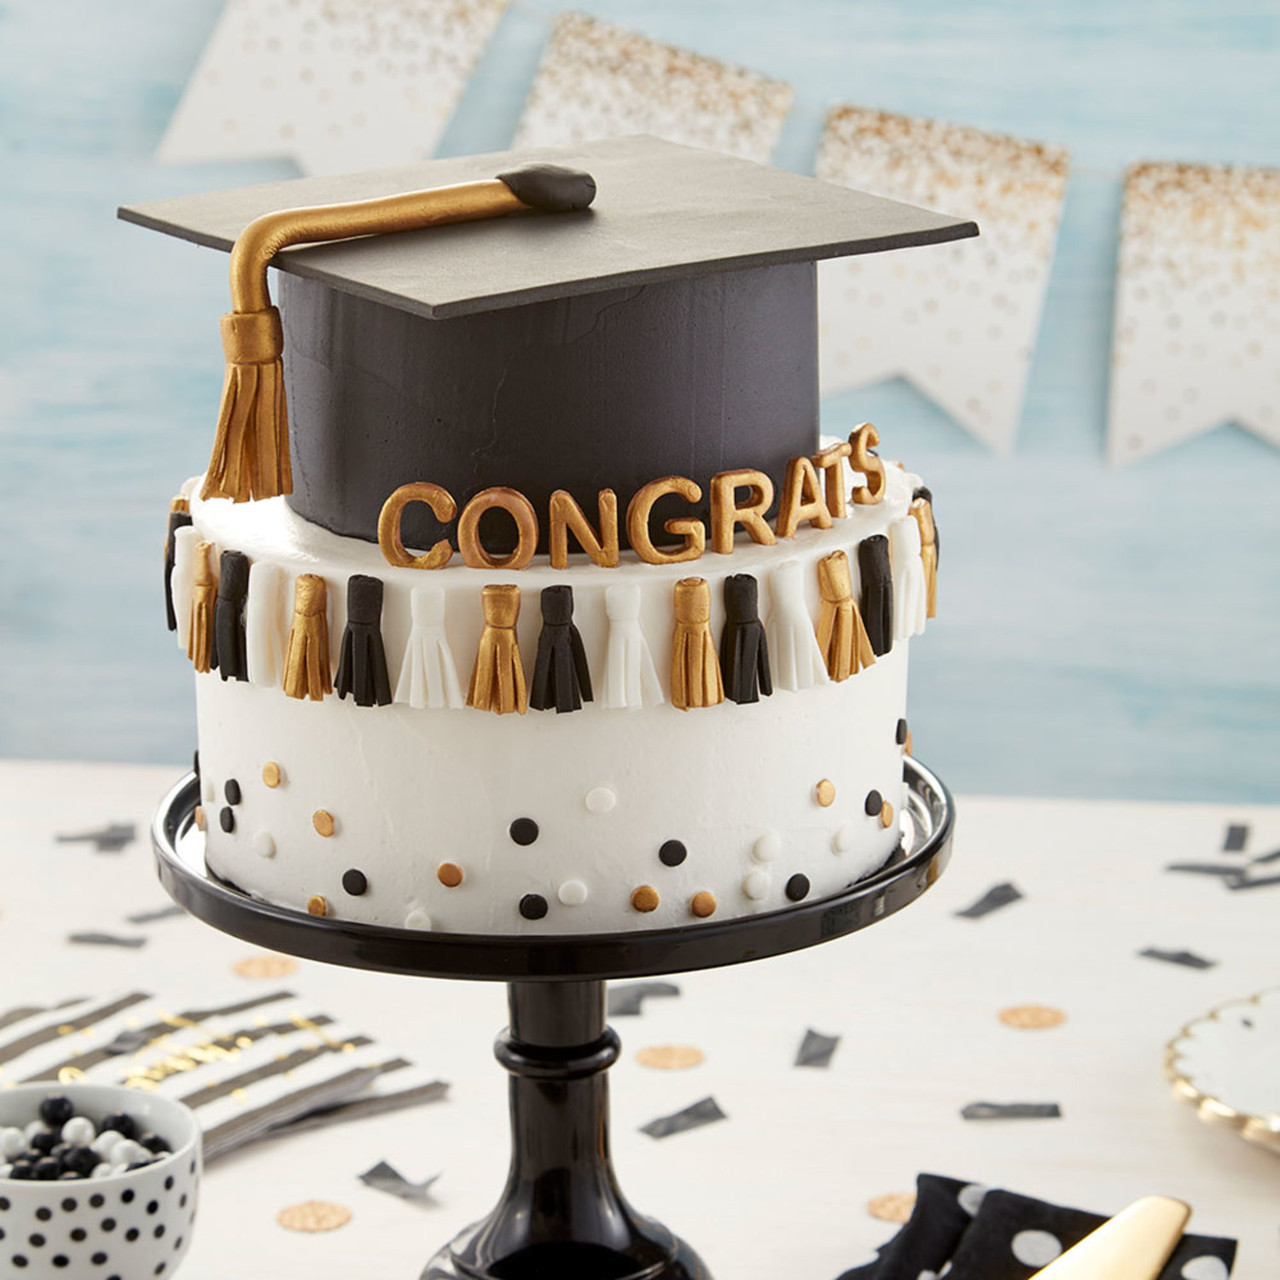 Graduation-themed graduation cake decor ideas for celebrating achievements